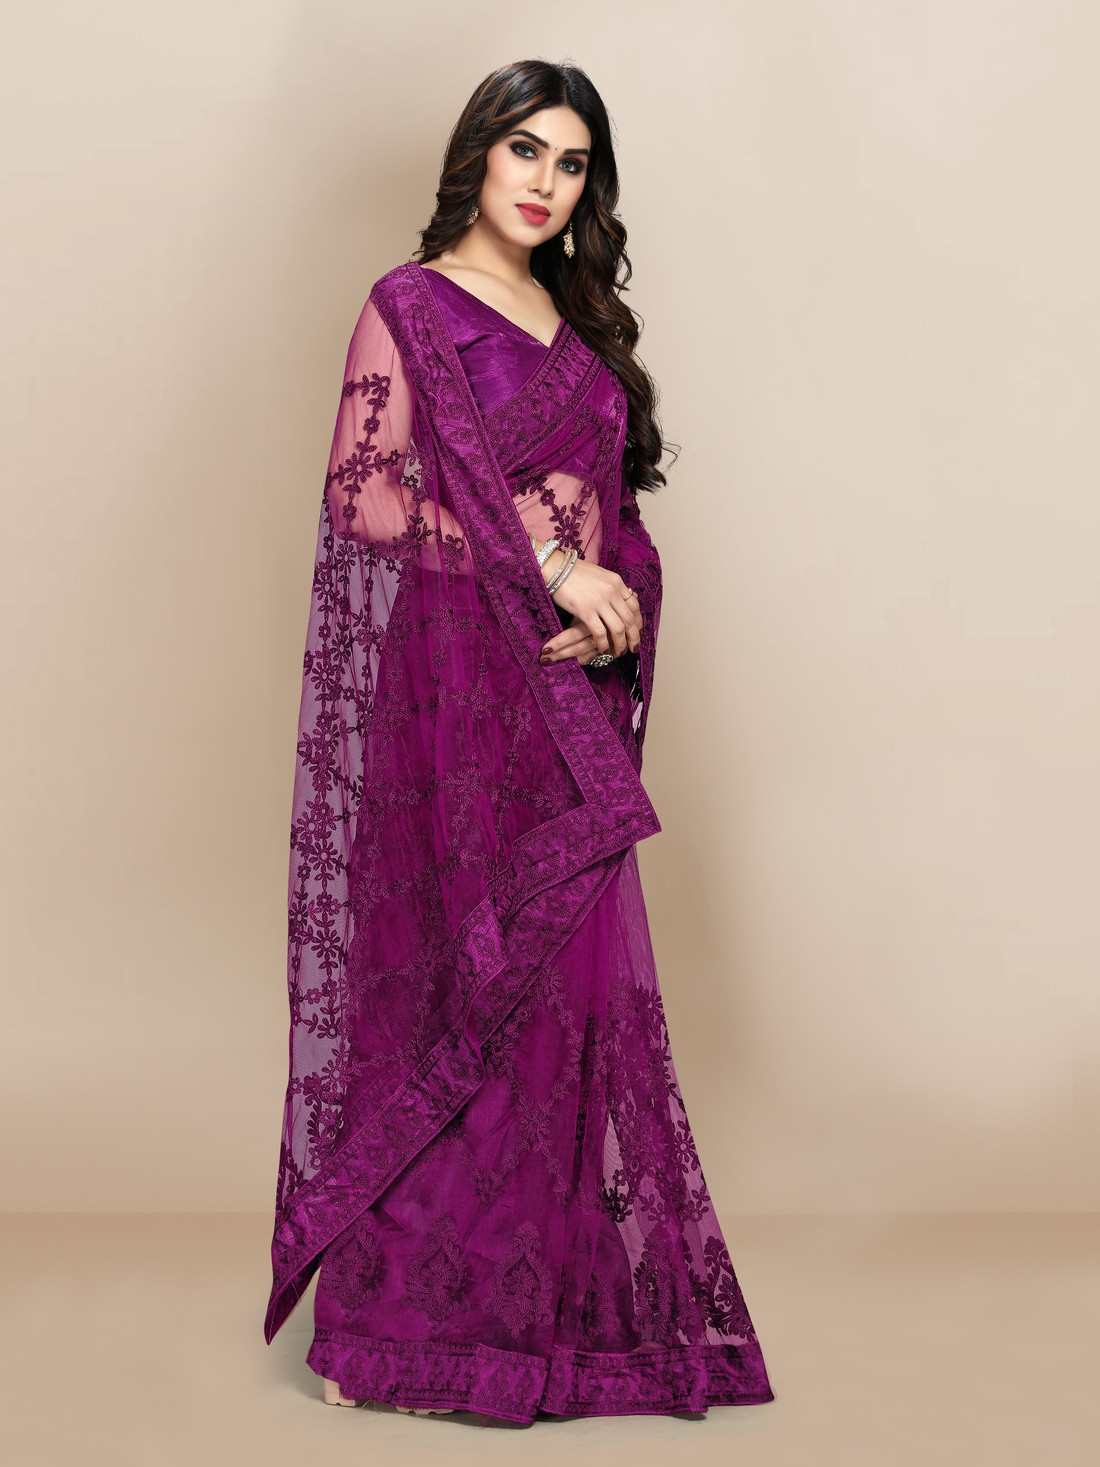 Super Net beautiful Designer embroidery Saree - Purple